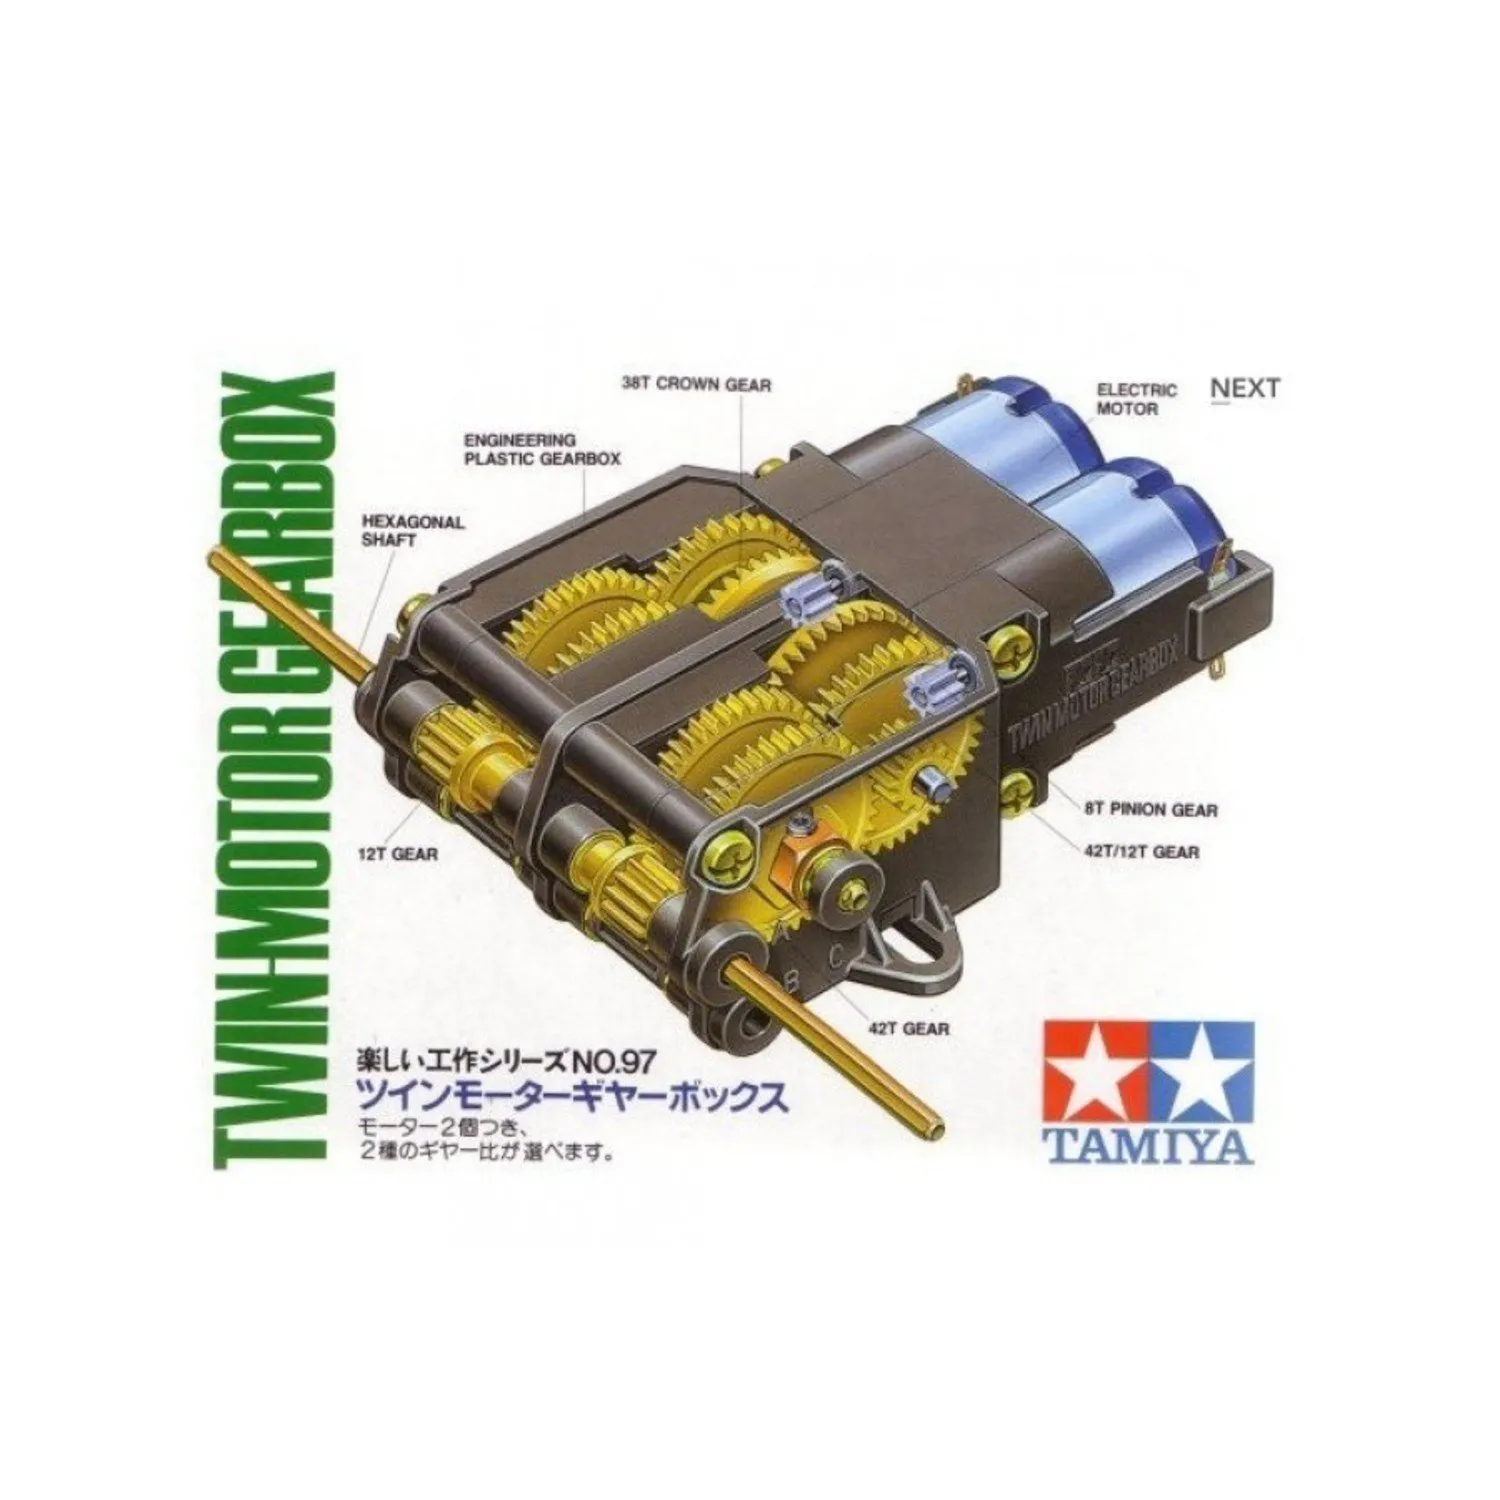 Photo of Tamiya Dual Motor GearBox